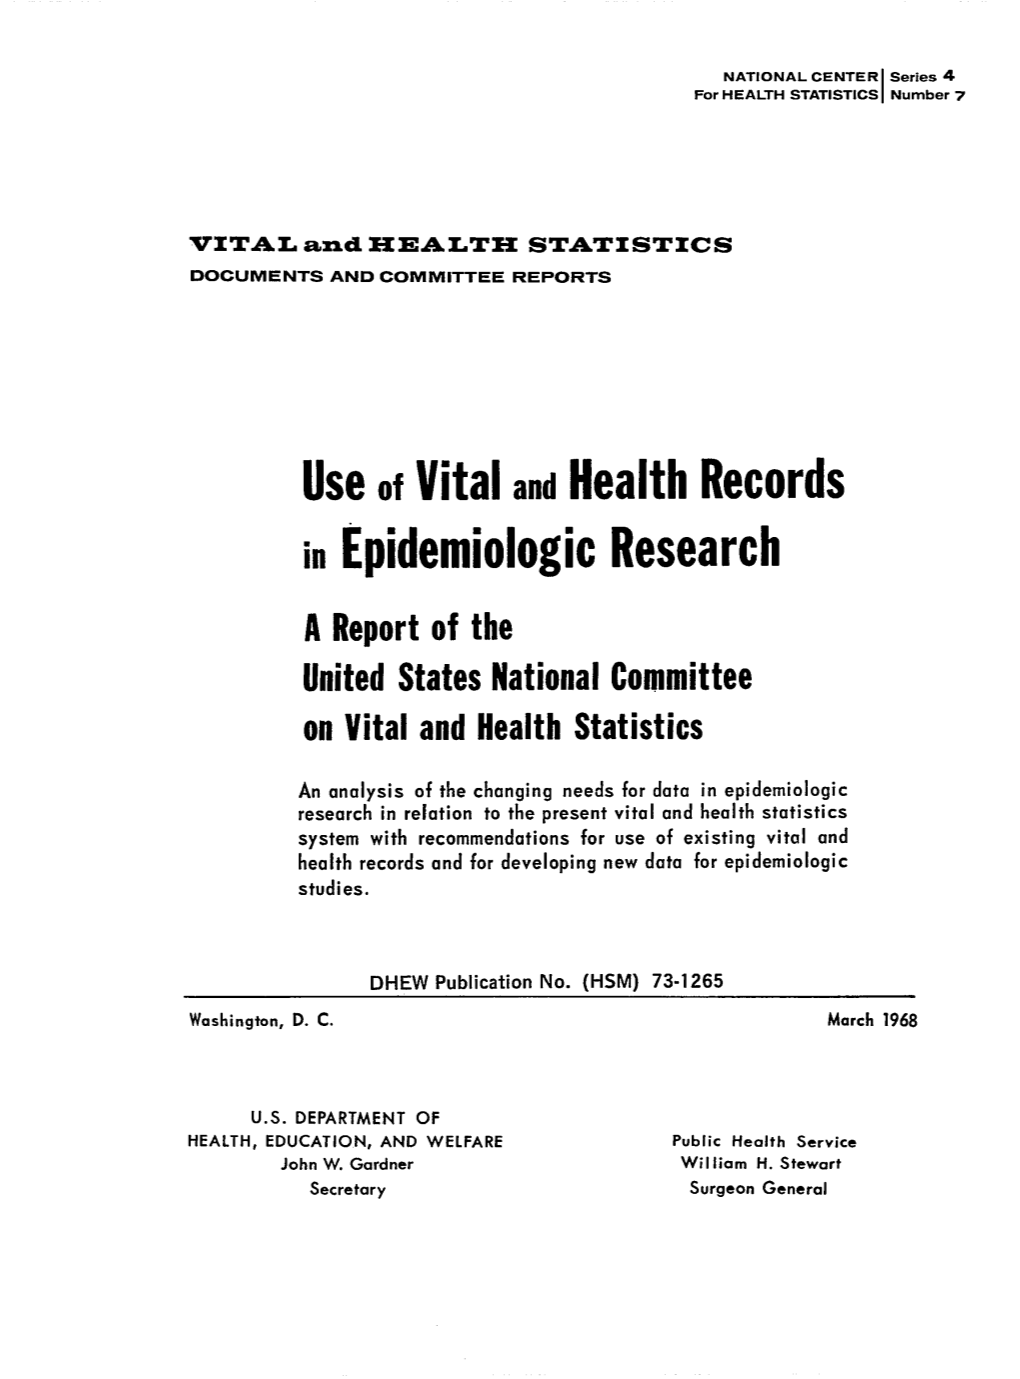 Vital and Health Statistics; Series 4, No. 7 (3/68)